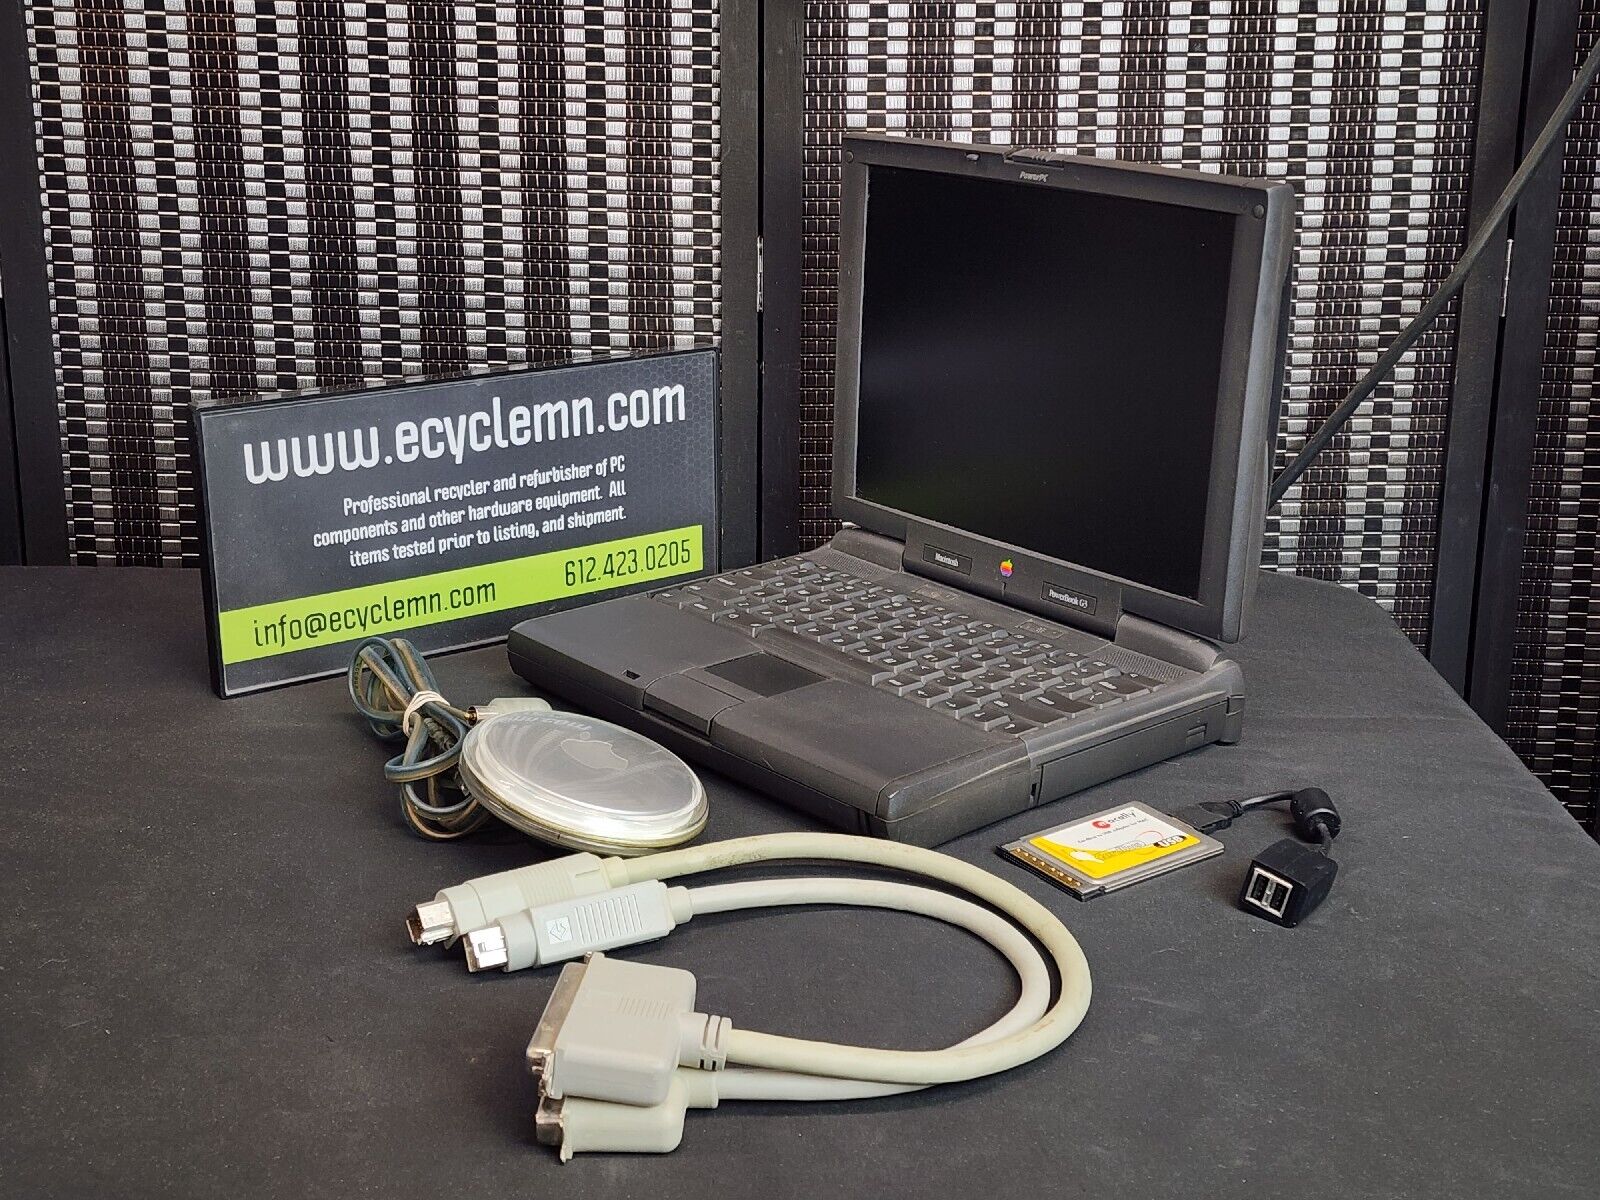 Vintage Apple M3553 Macintosh PowerBook G3 Laptop w/Yoyo Adapter & Extras *READ*